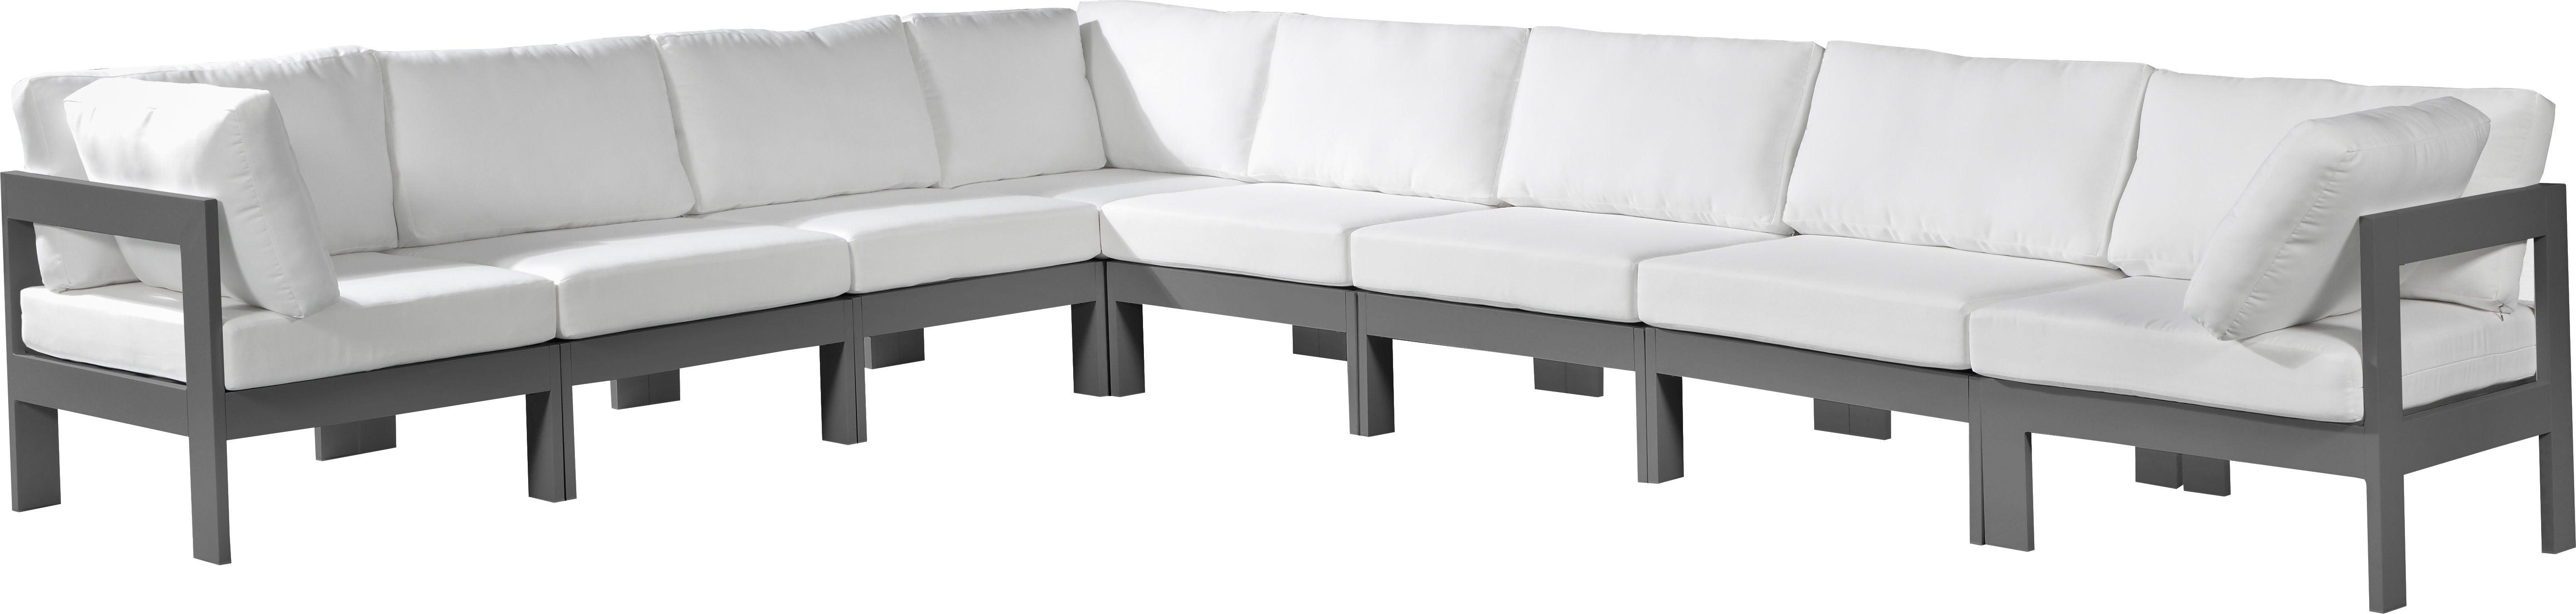 Meridian Furniture - Nizuc - Outdoor Patio Modular Sectional 8 Piece - White - Fabric - Modern & Contemporary - 5th Avenue Furniture